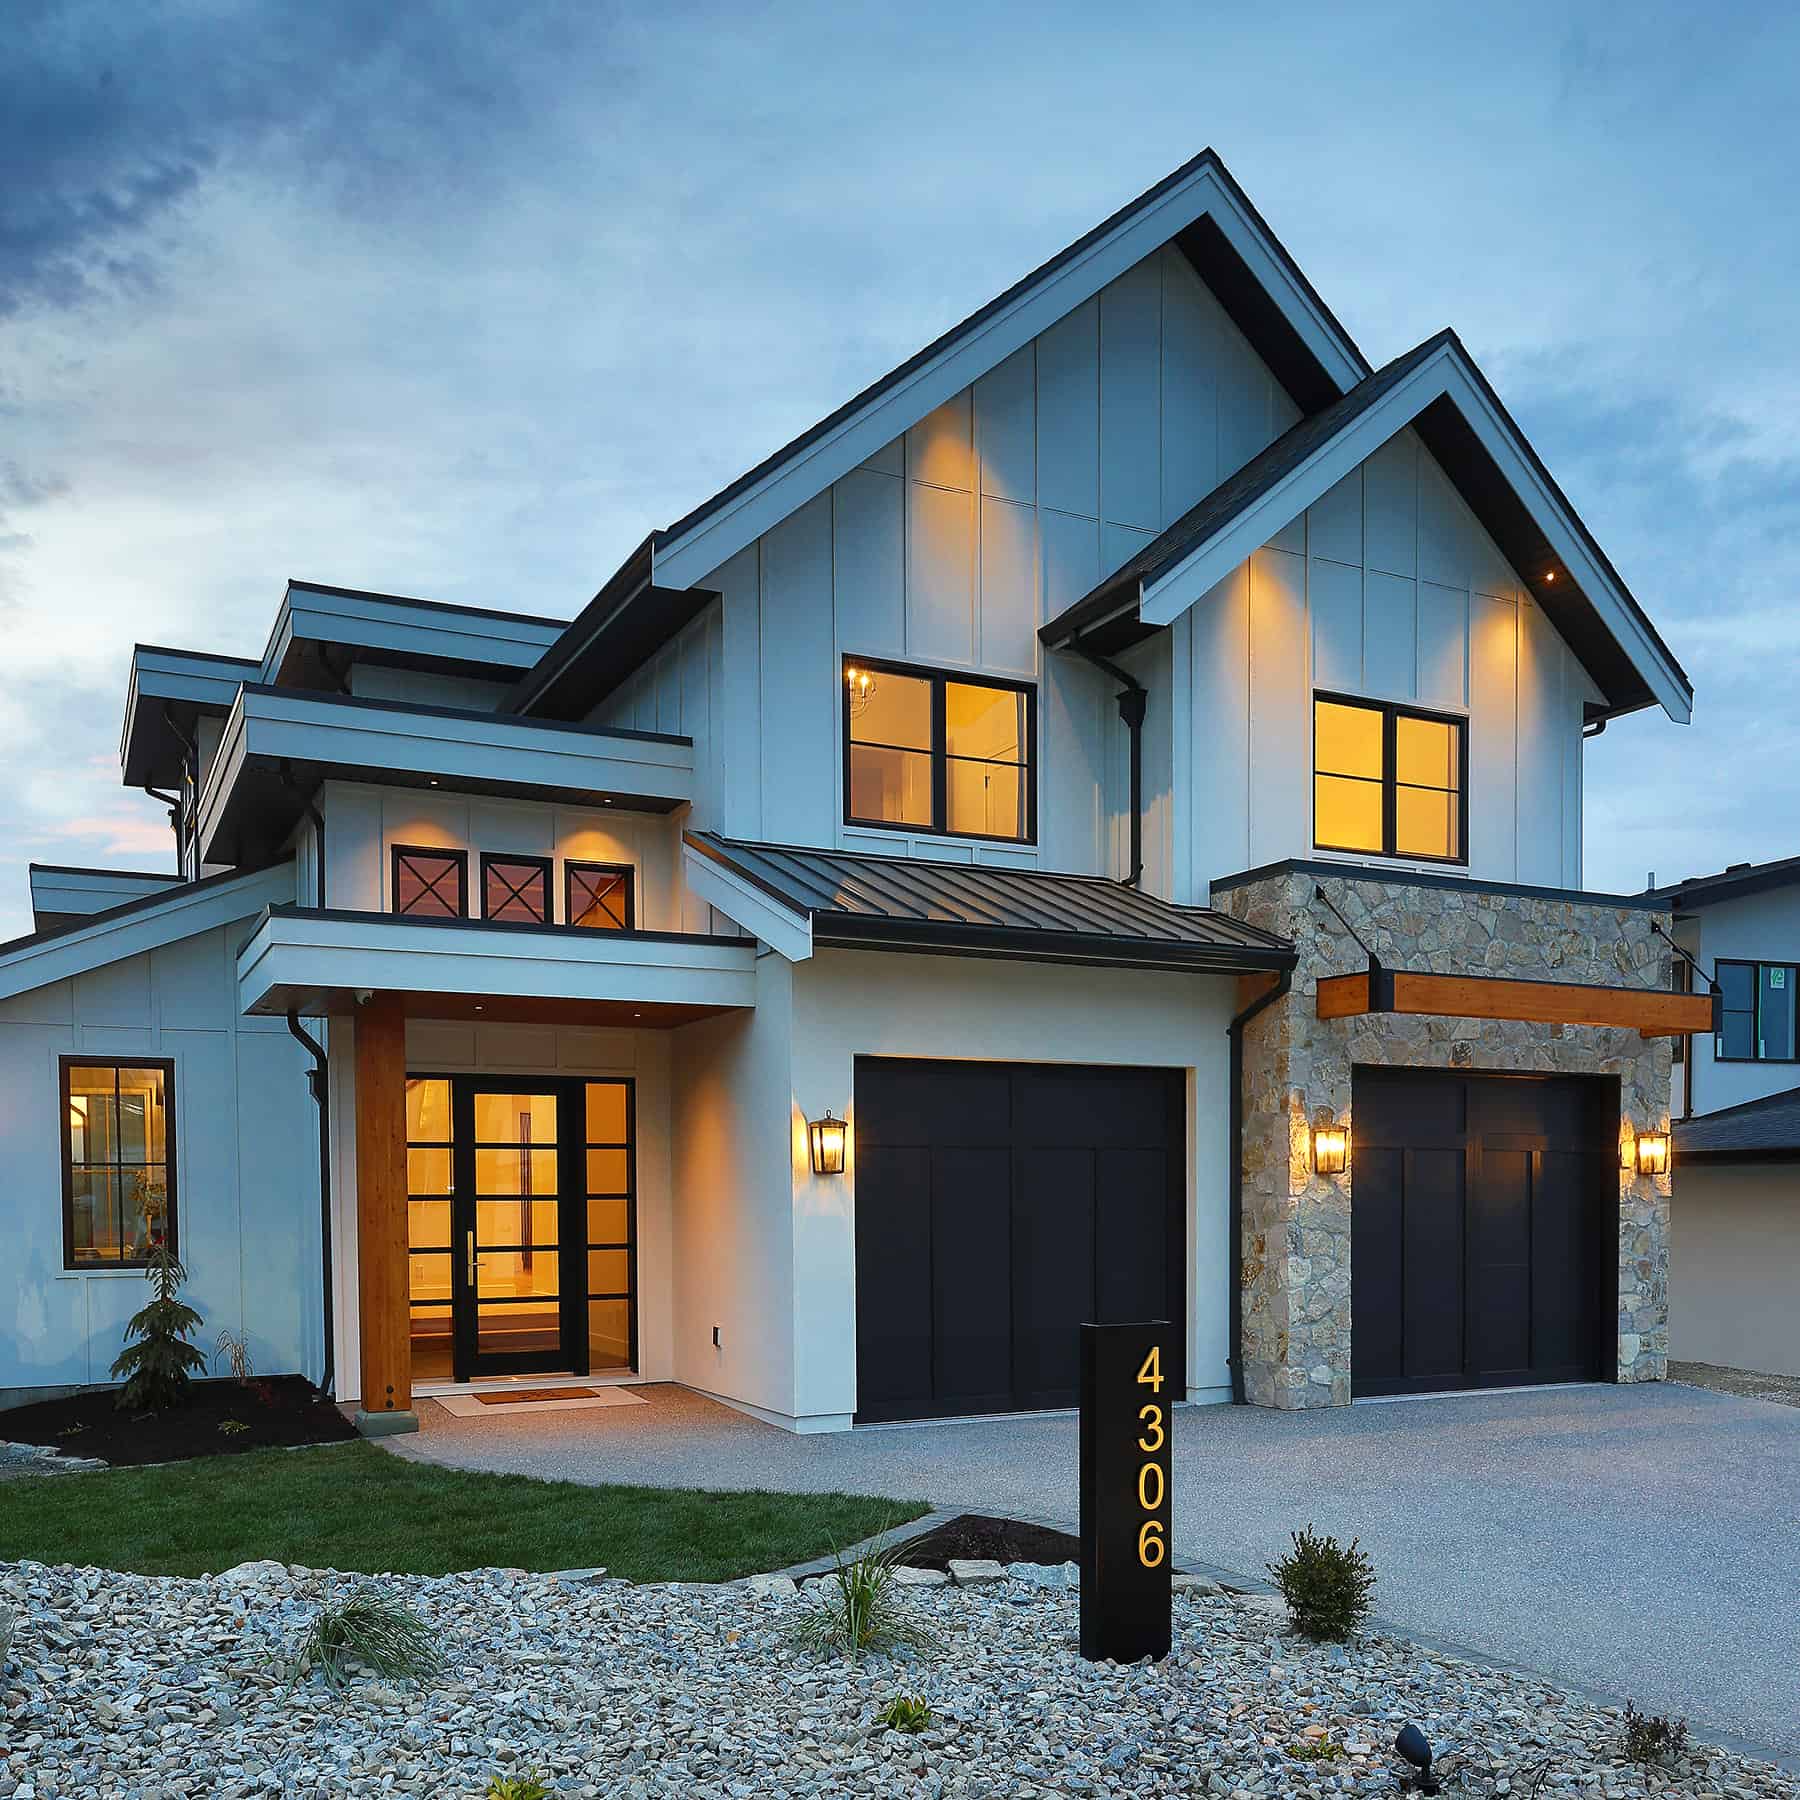 Align West Homes - Okanagan BC - Custom Home Builder - Podcast Image A